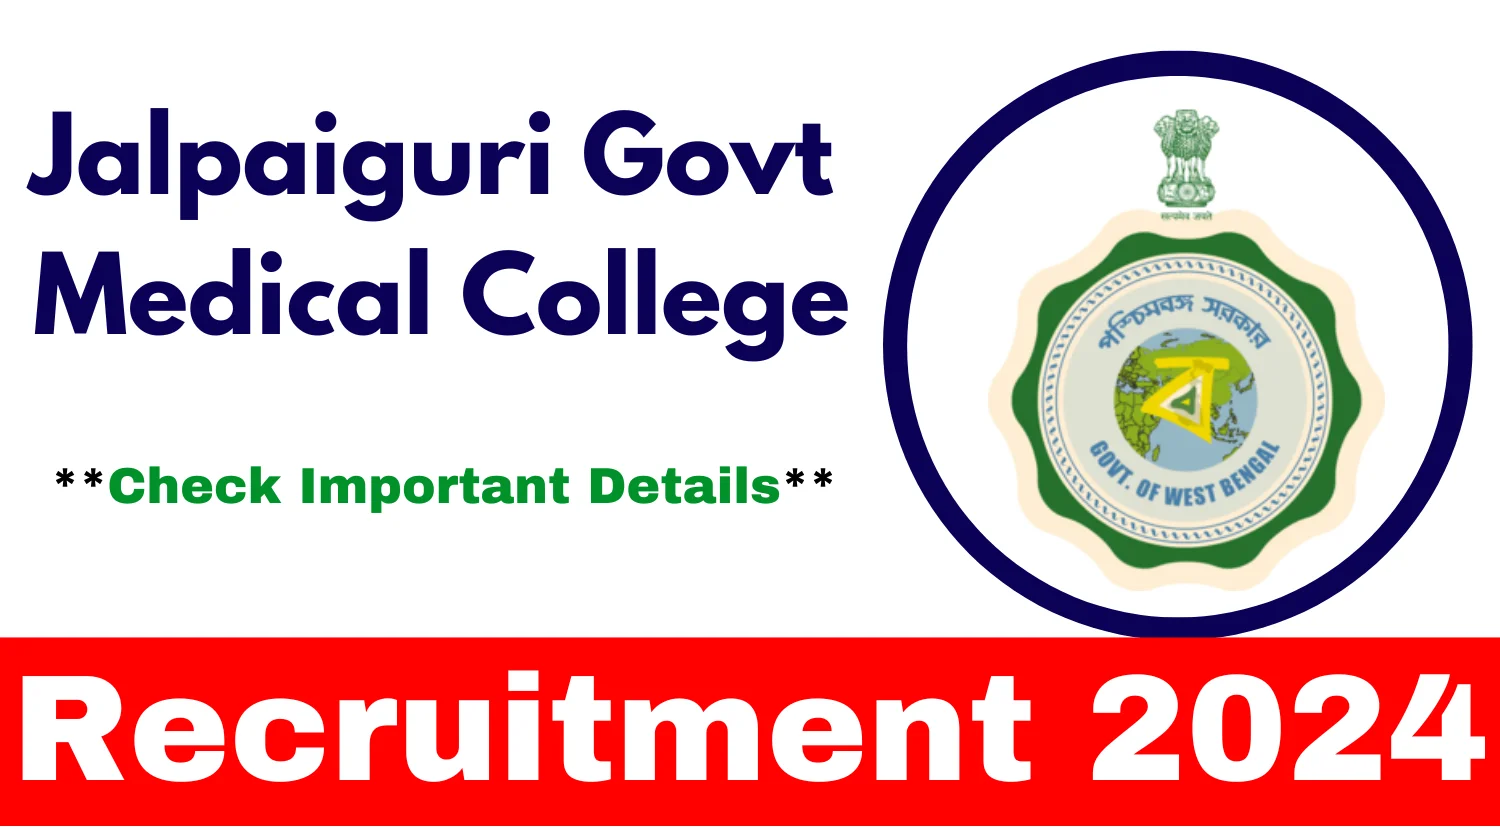 Jalpaiguri Govt Medical College Senior Residents Recruitment 2024